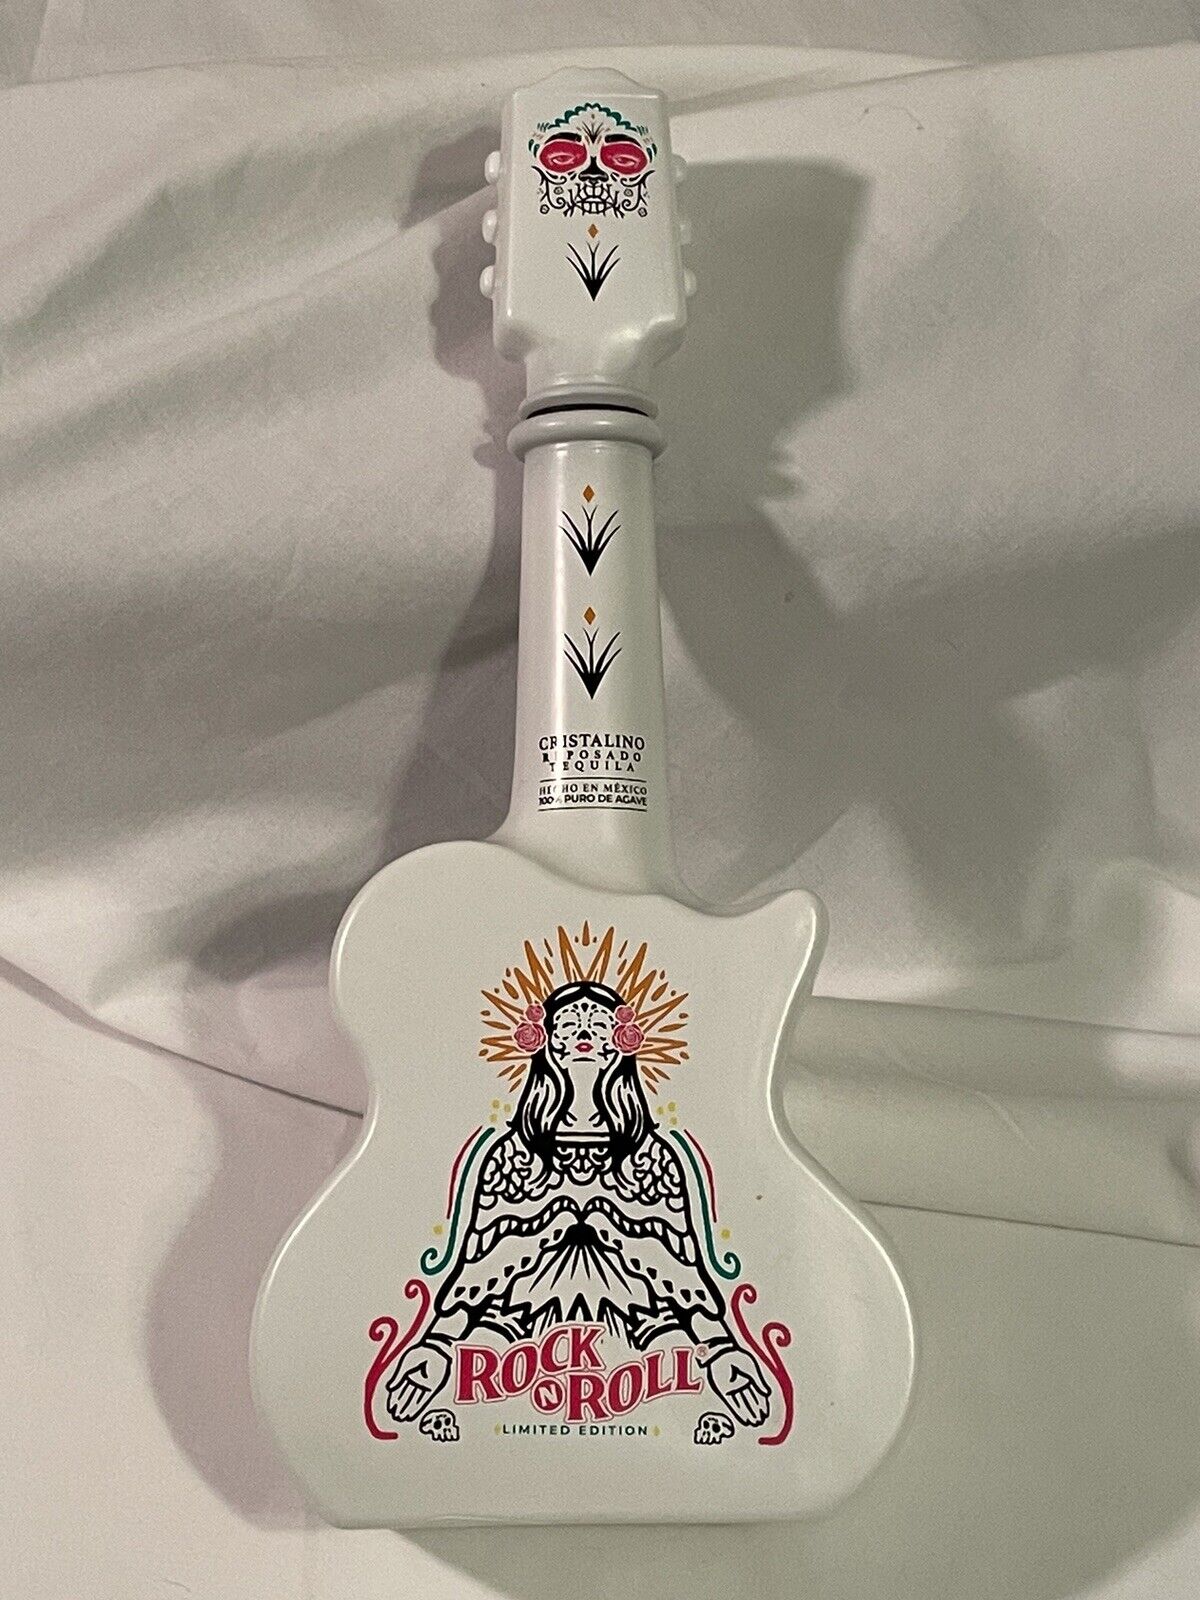 Rock N Roll Tequila White Guitar Bottle Empty Cristalino Reposado Limited Edit’n